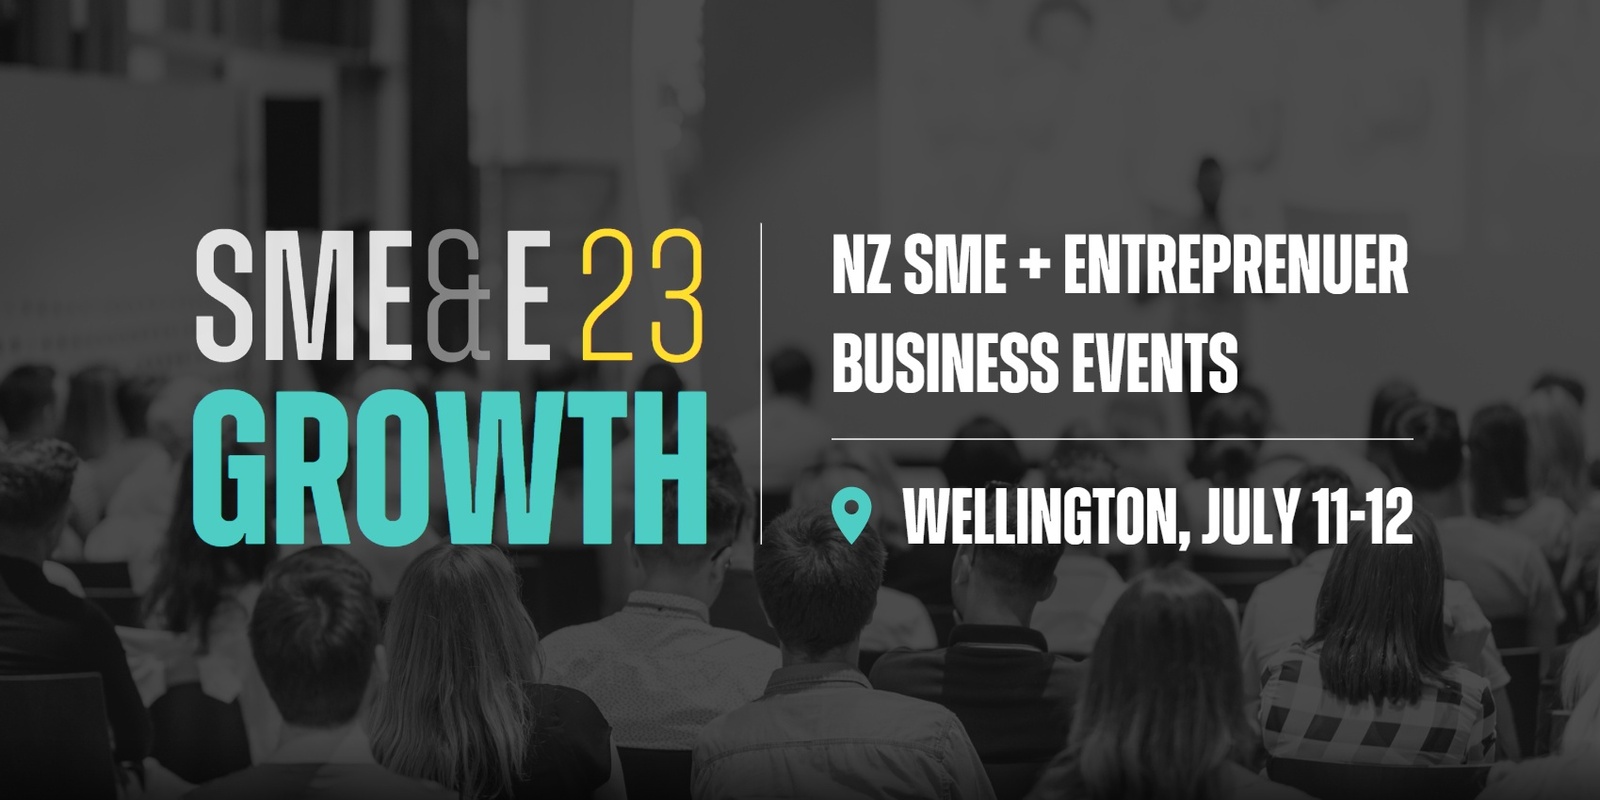 NZ SME & Entrepreneur Events presents SME&E GROWTH